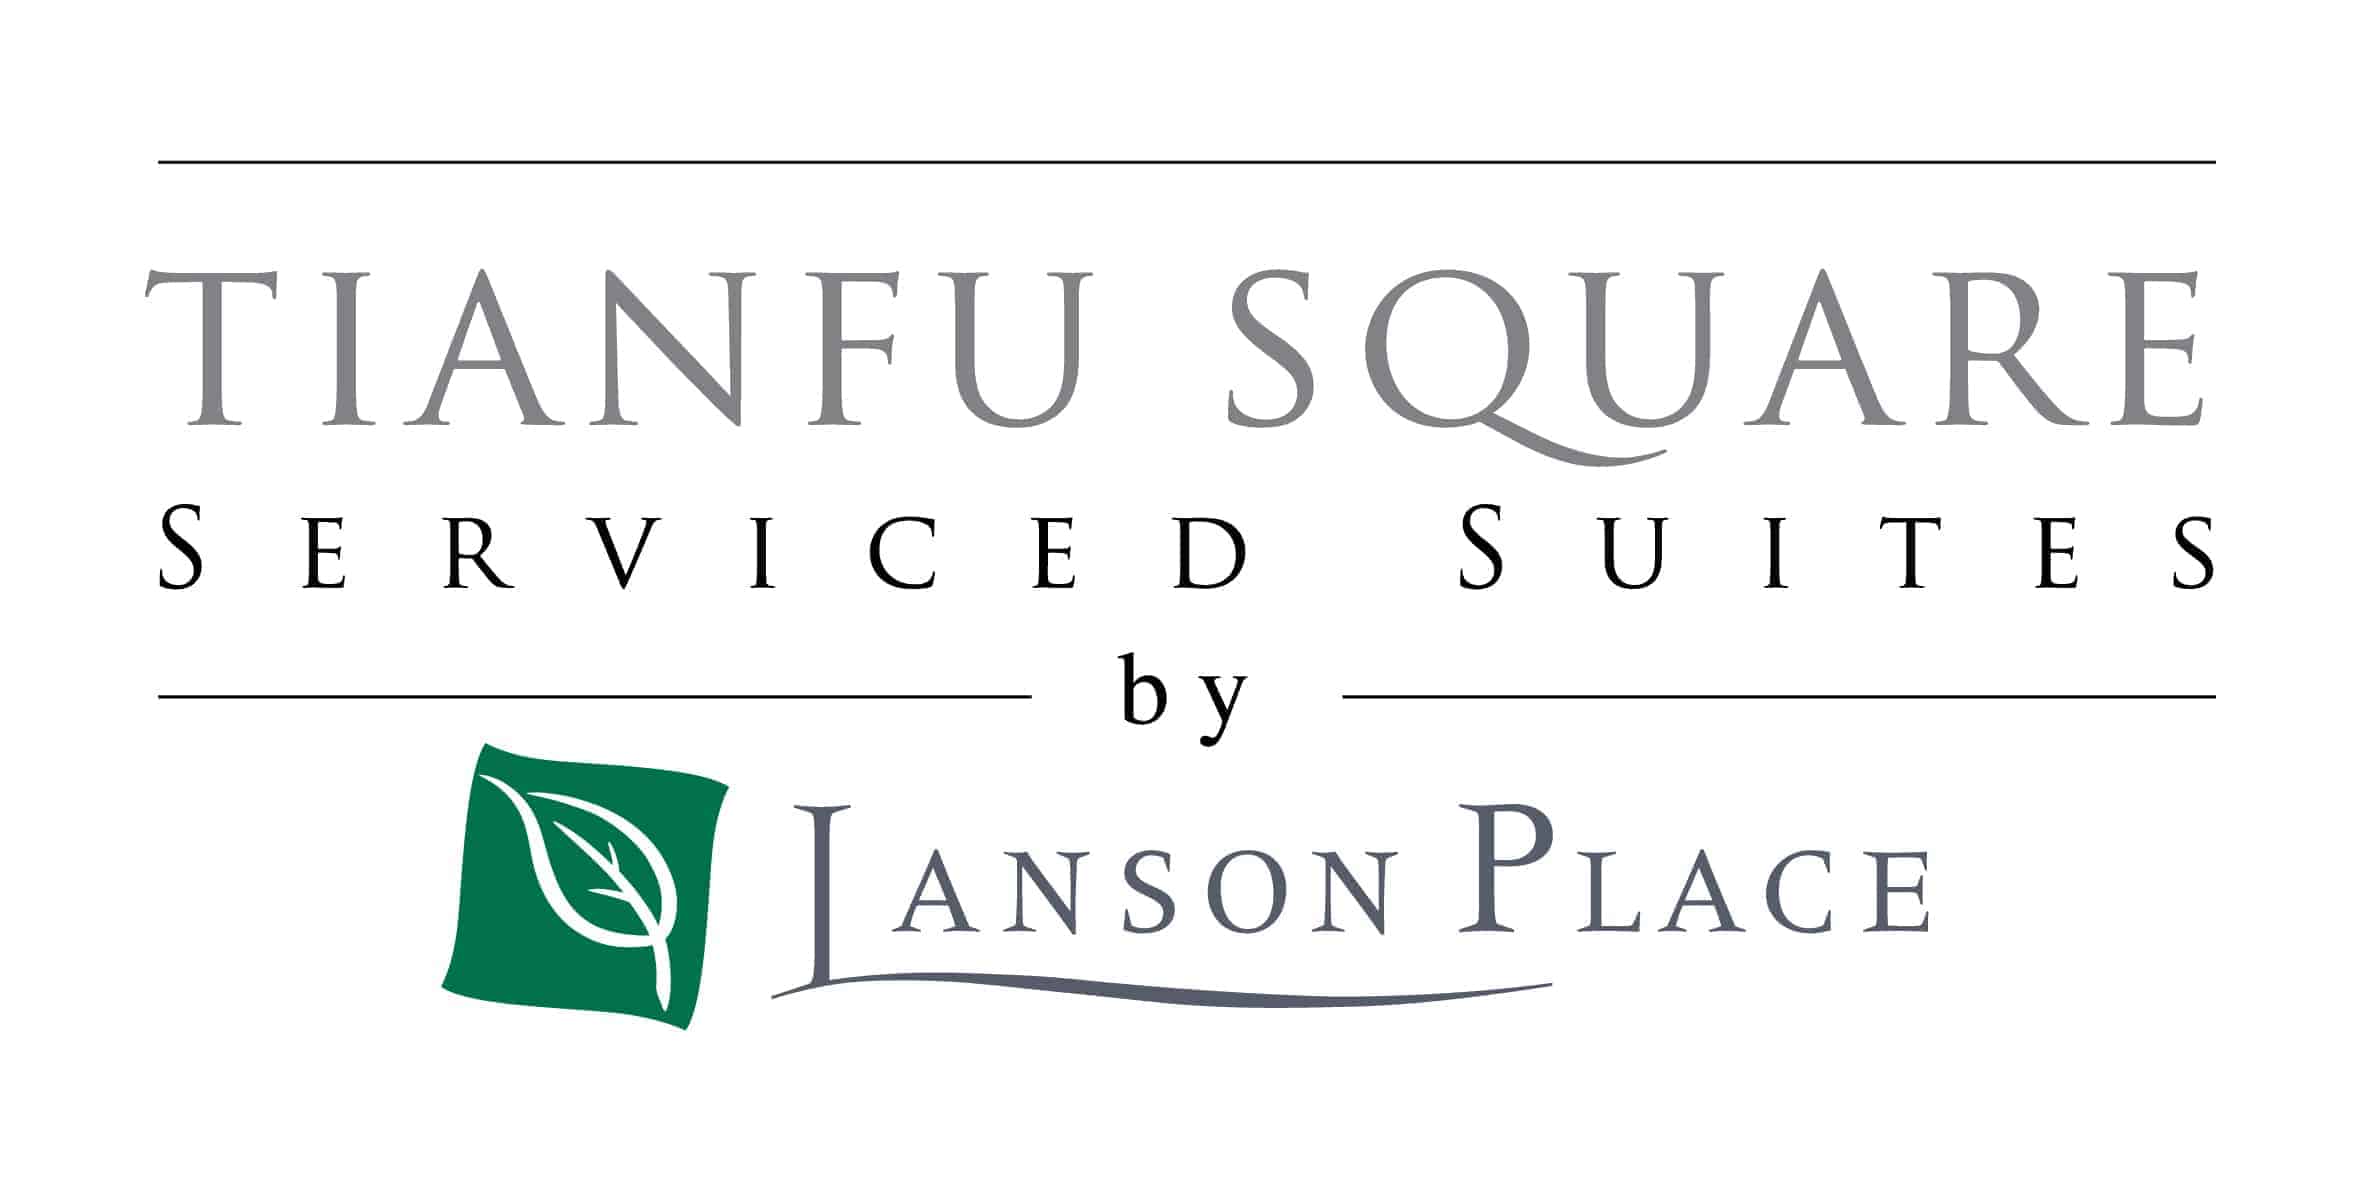 Tianfu Square Serviced Suites by Lanson Place logo high res